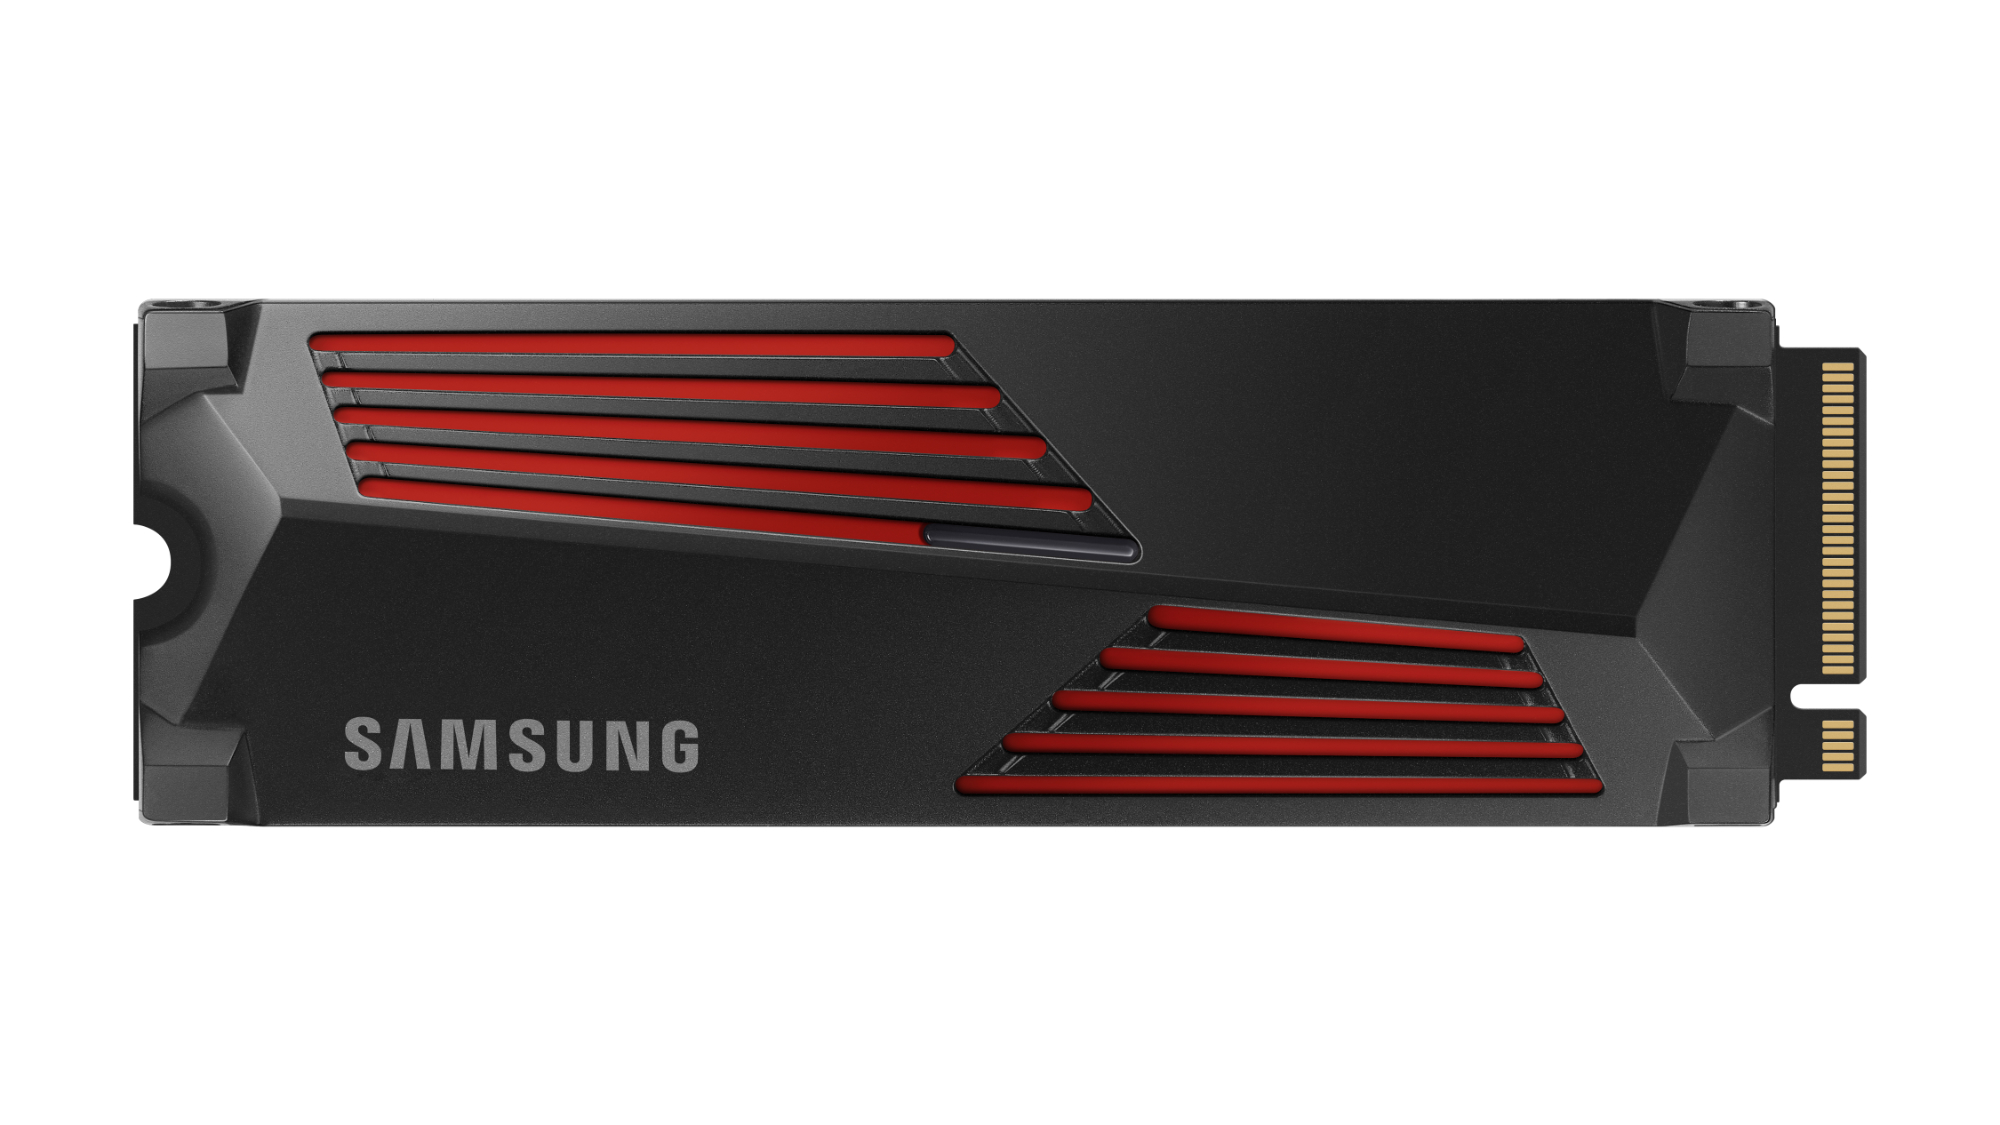 Samsung 990 Pro SSD with Heatsink and RGB lighting design